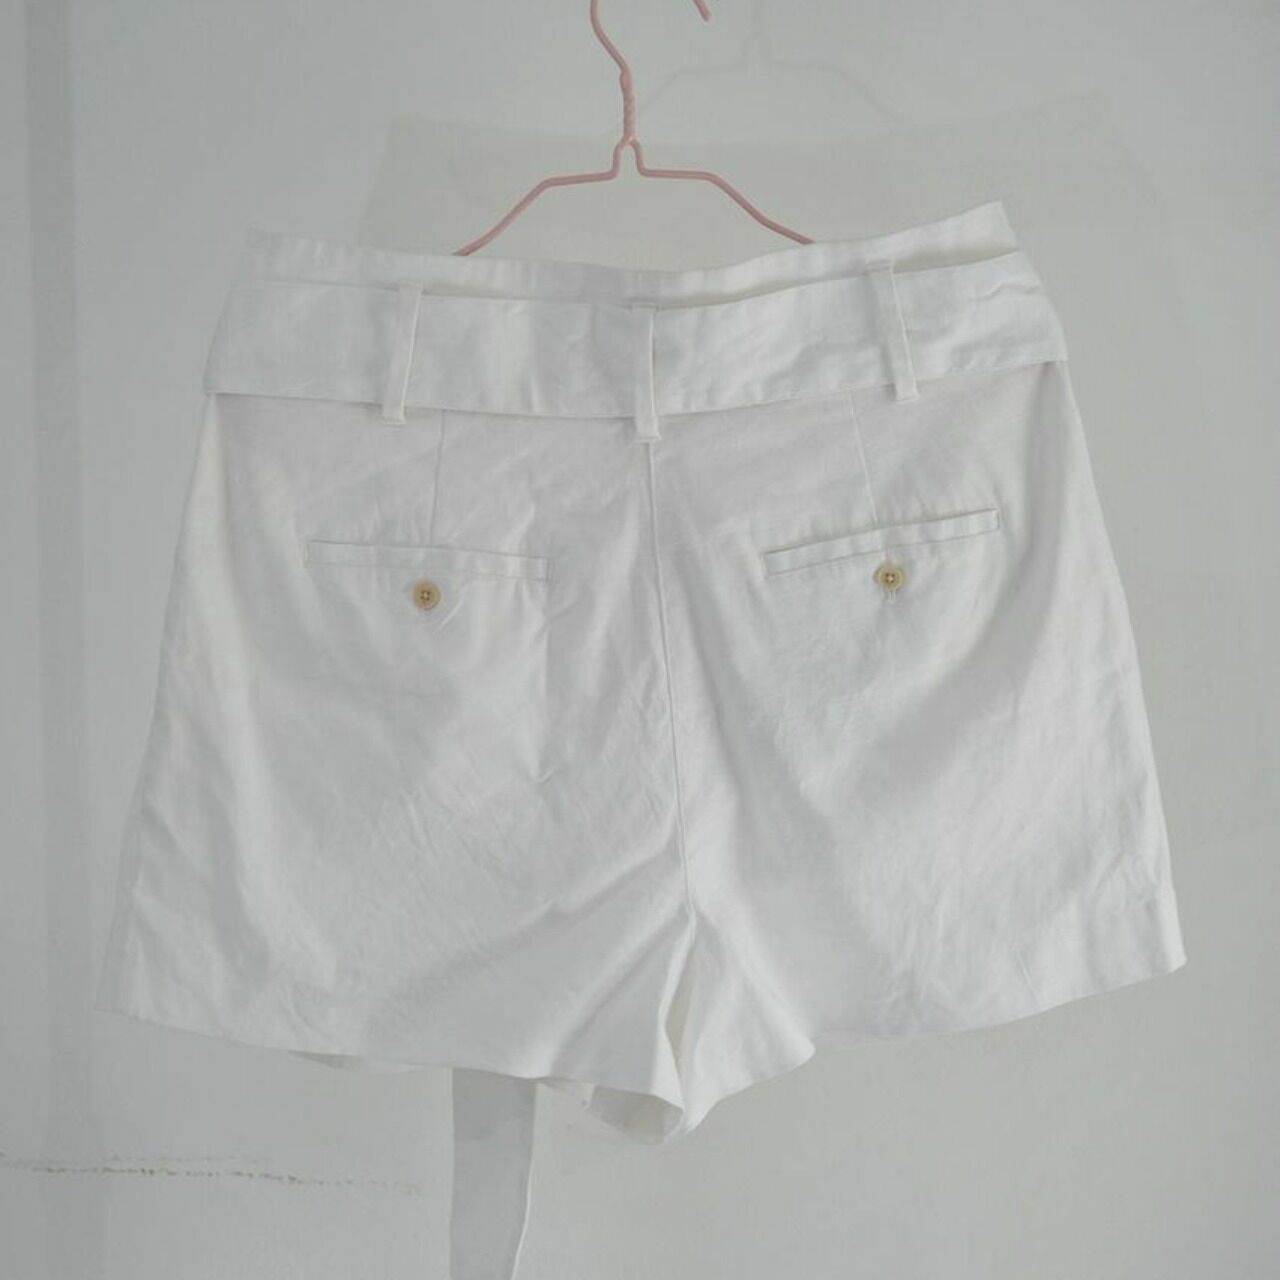 Seed Heritage Beige & White Short Pants